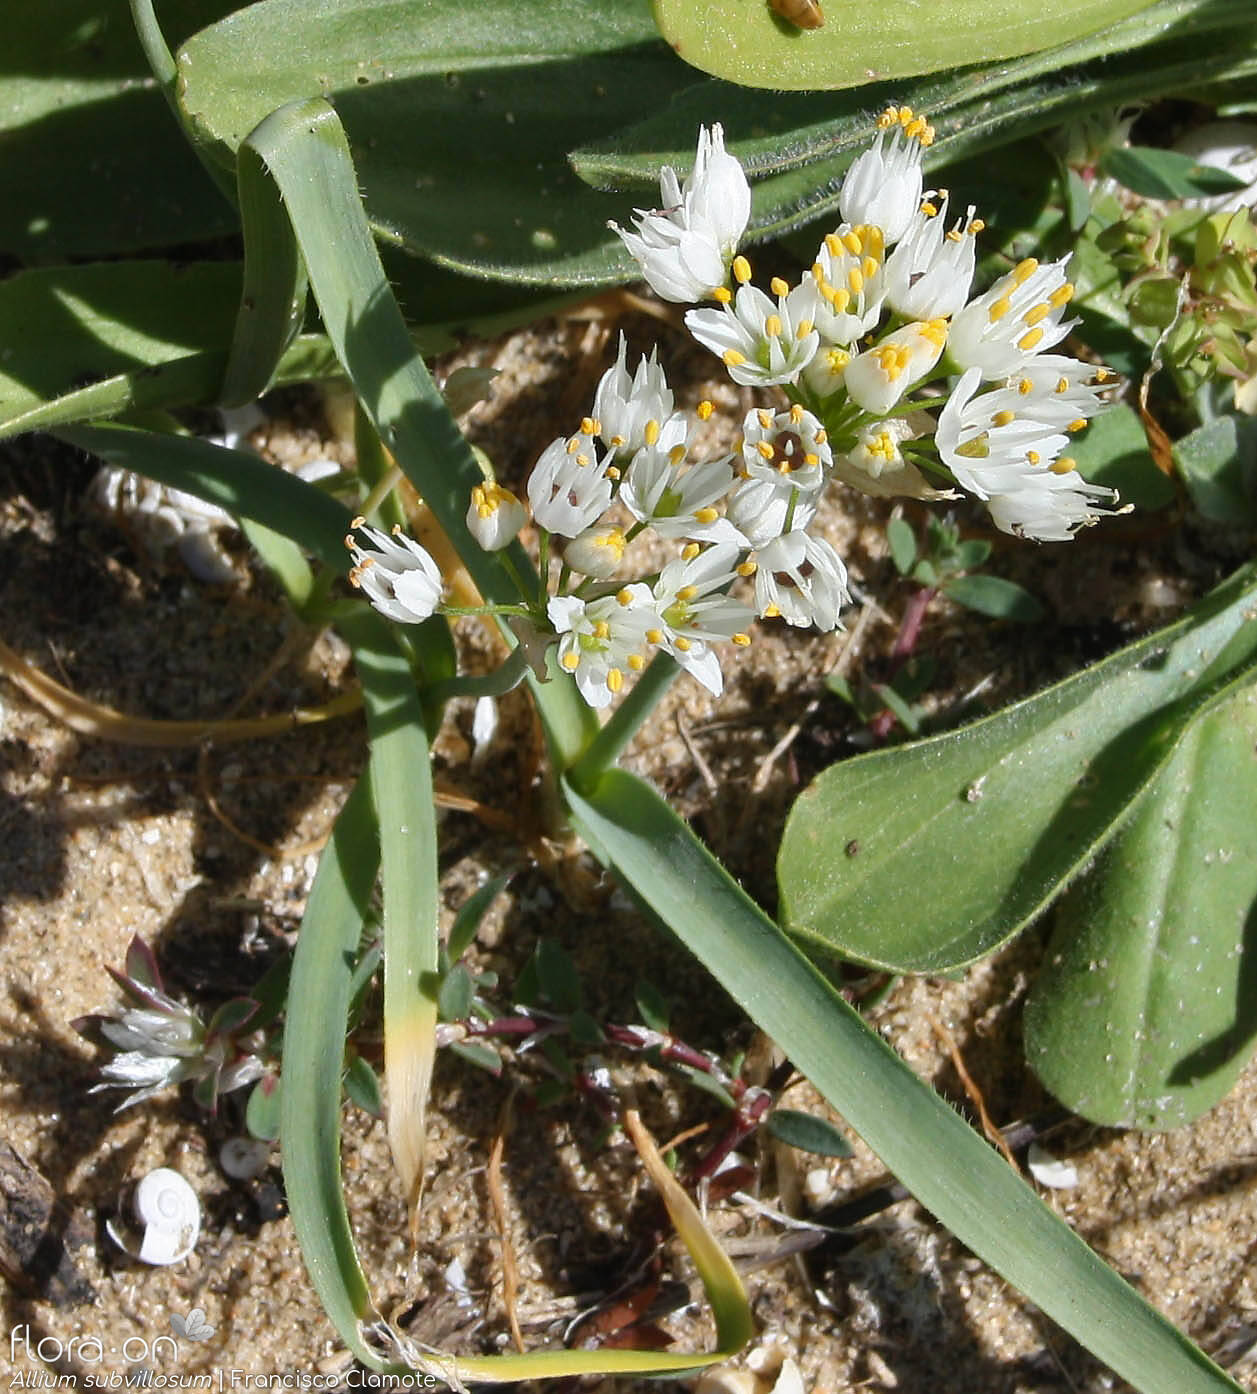 Allium subvillosum - Flor (geral) | Francisco Clamote; CC BY-NC 4.0